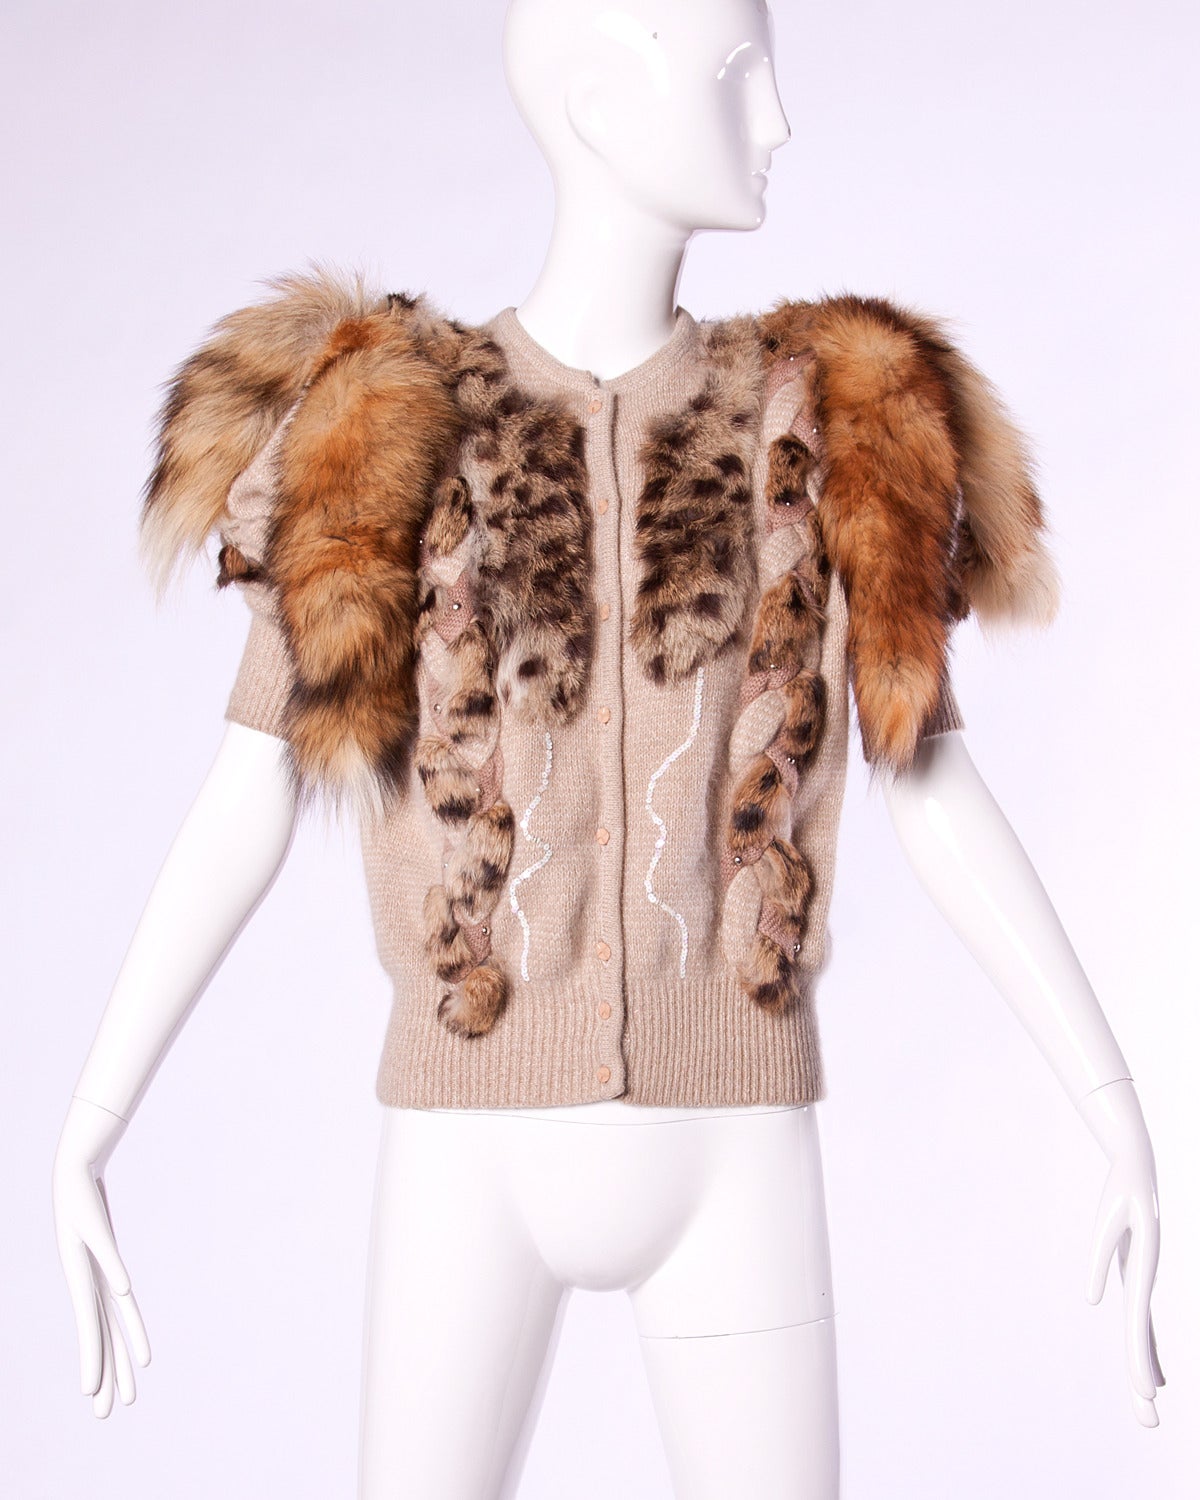 Unworn Vintage 1980s 80s Fox Fur Tails Embellished Cardigan Sweater Jacket 1